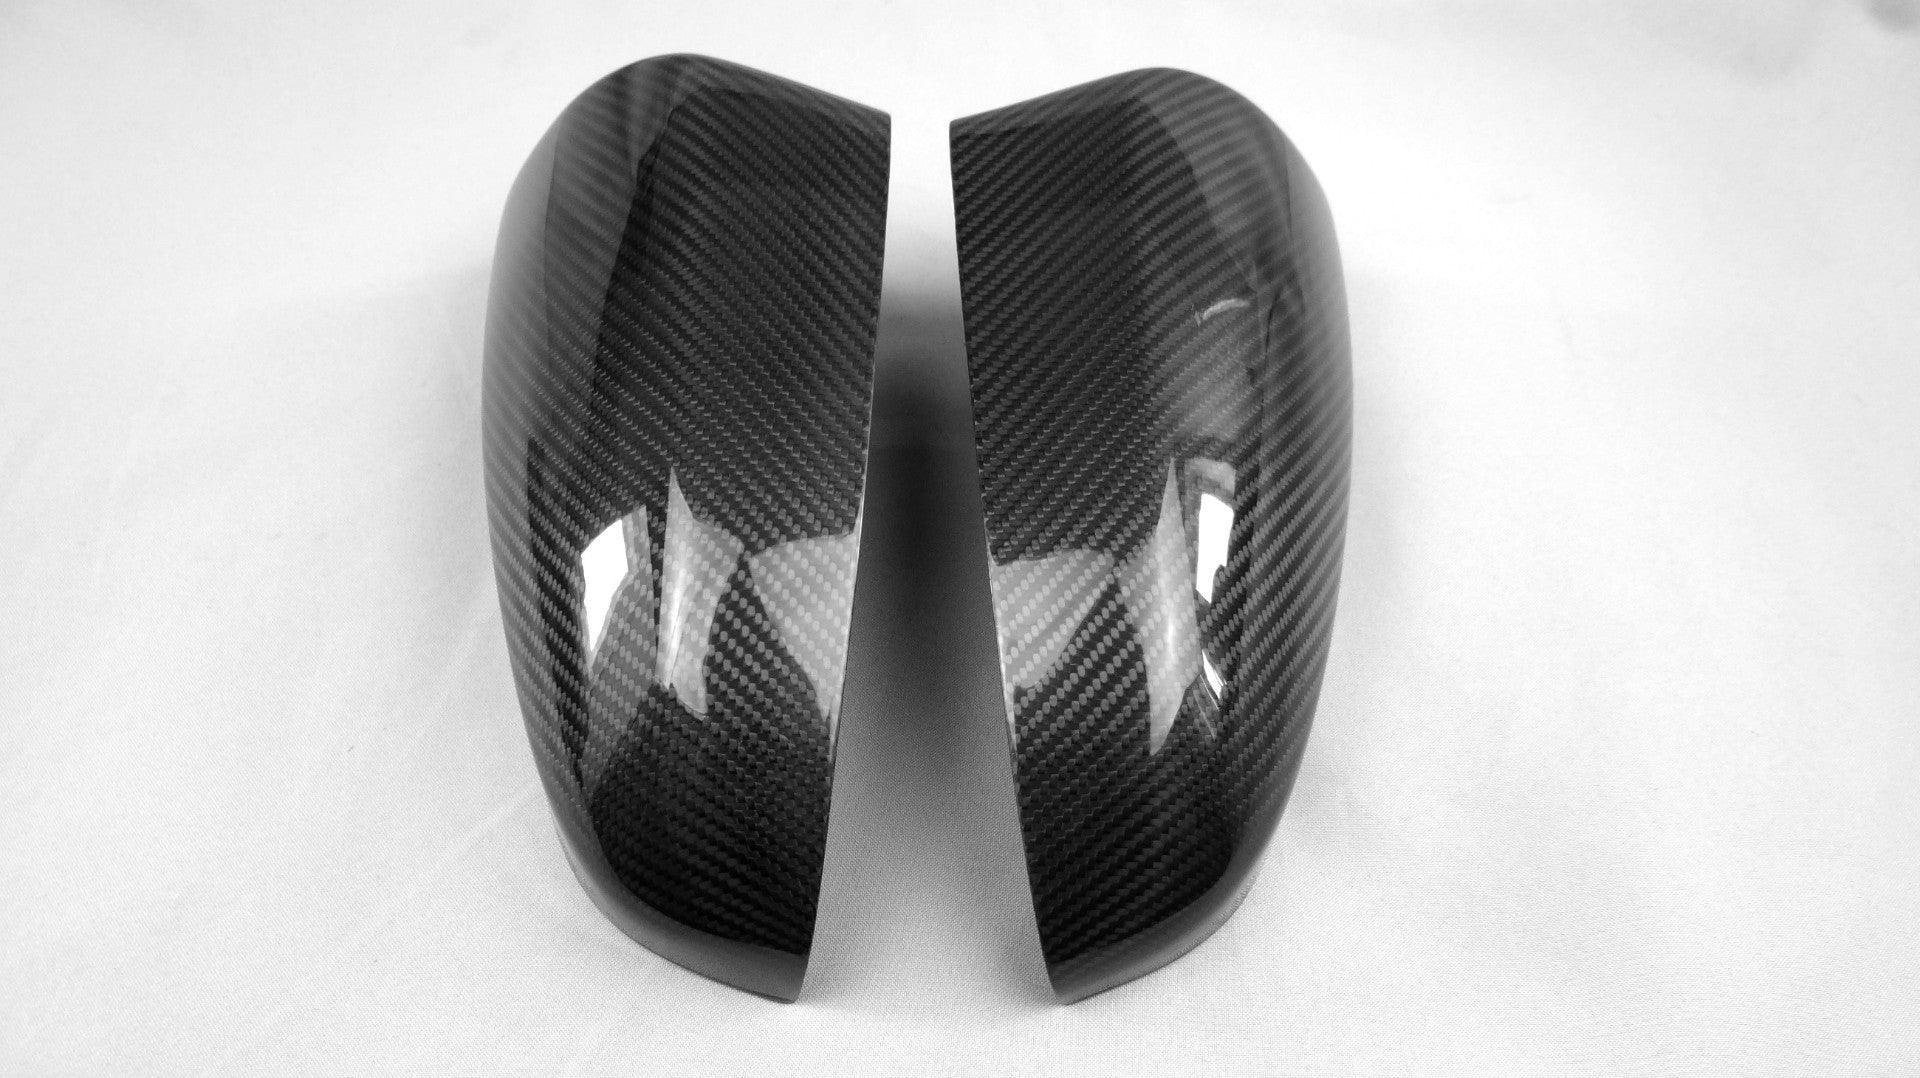 BMW M6 F06 F10 F12 F13 2012-2017 Mirrors Carbon Covers Caps 2pcs Set